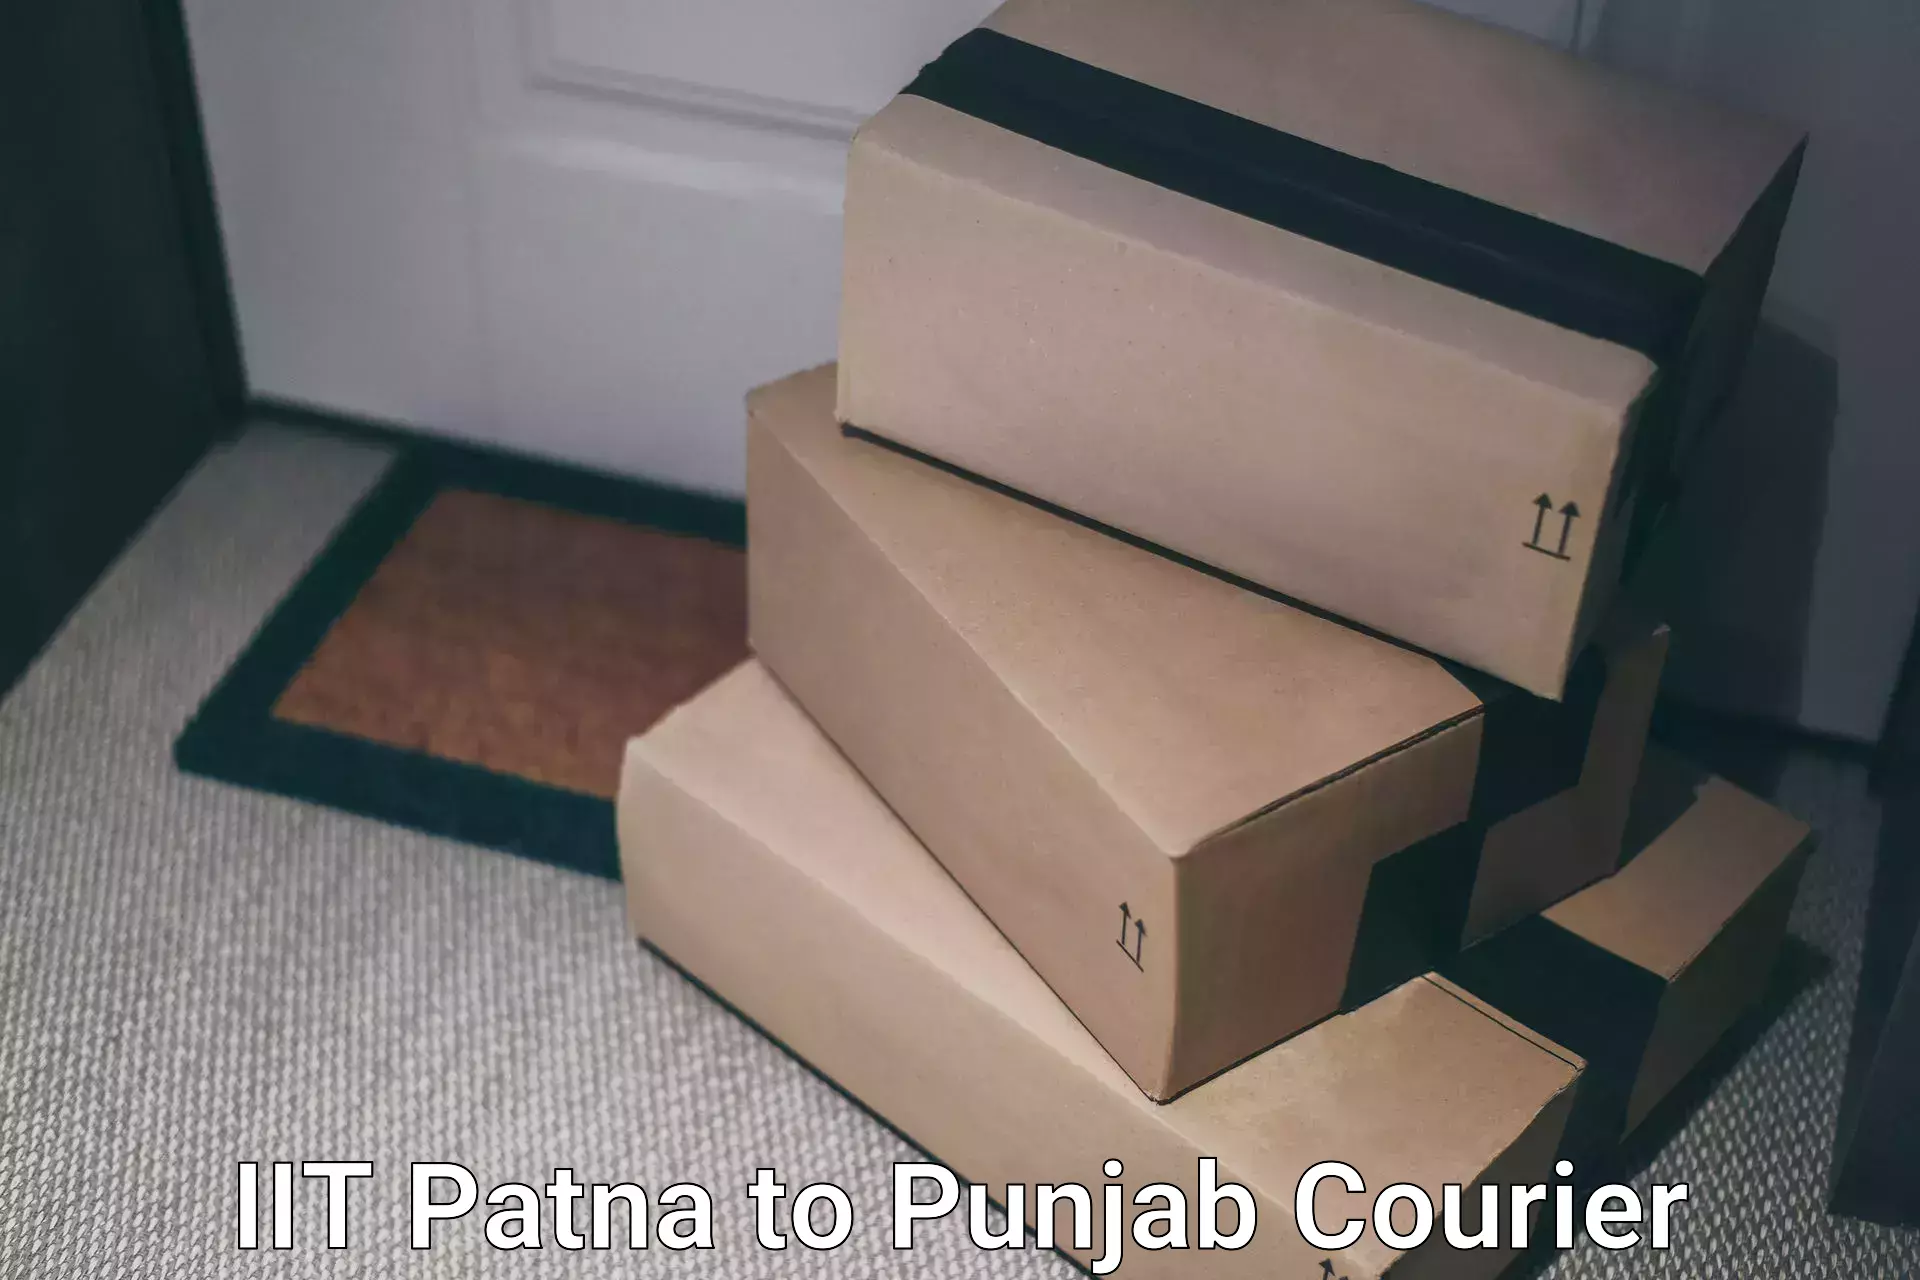 Next-day delivery options IIT Patna to Phagwara